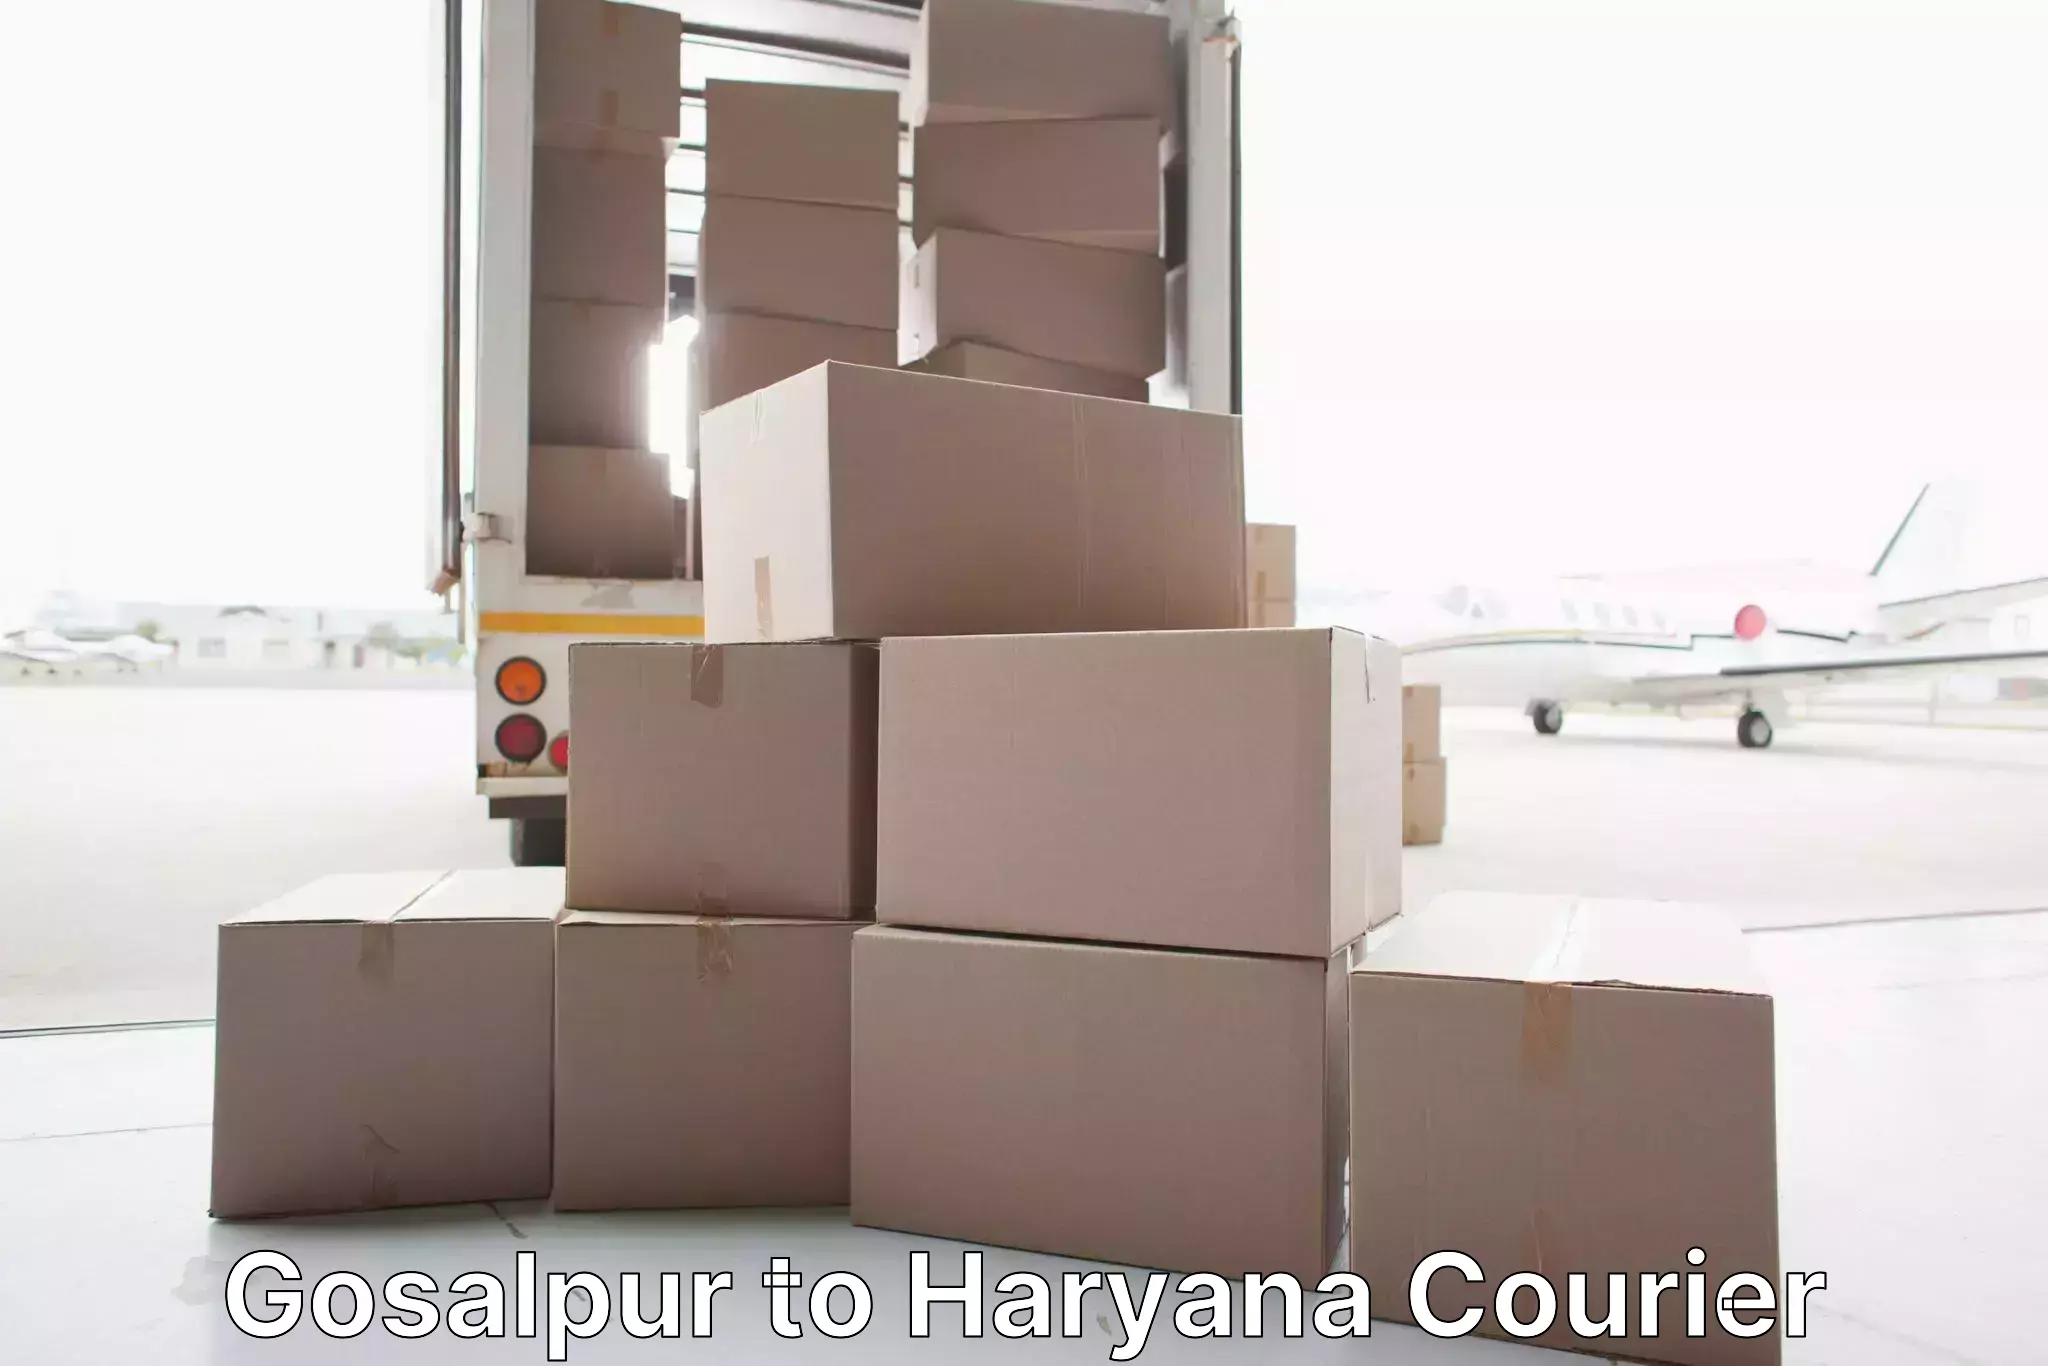 Seamless moving process Gosalpur to Kurukshetra